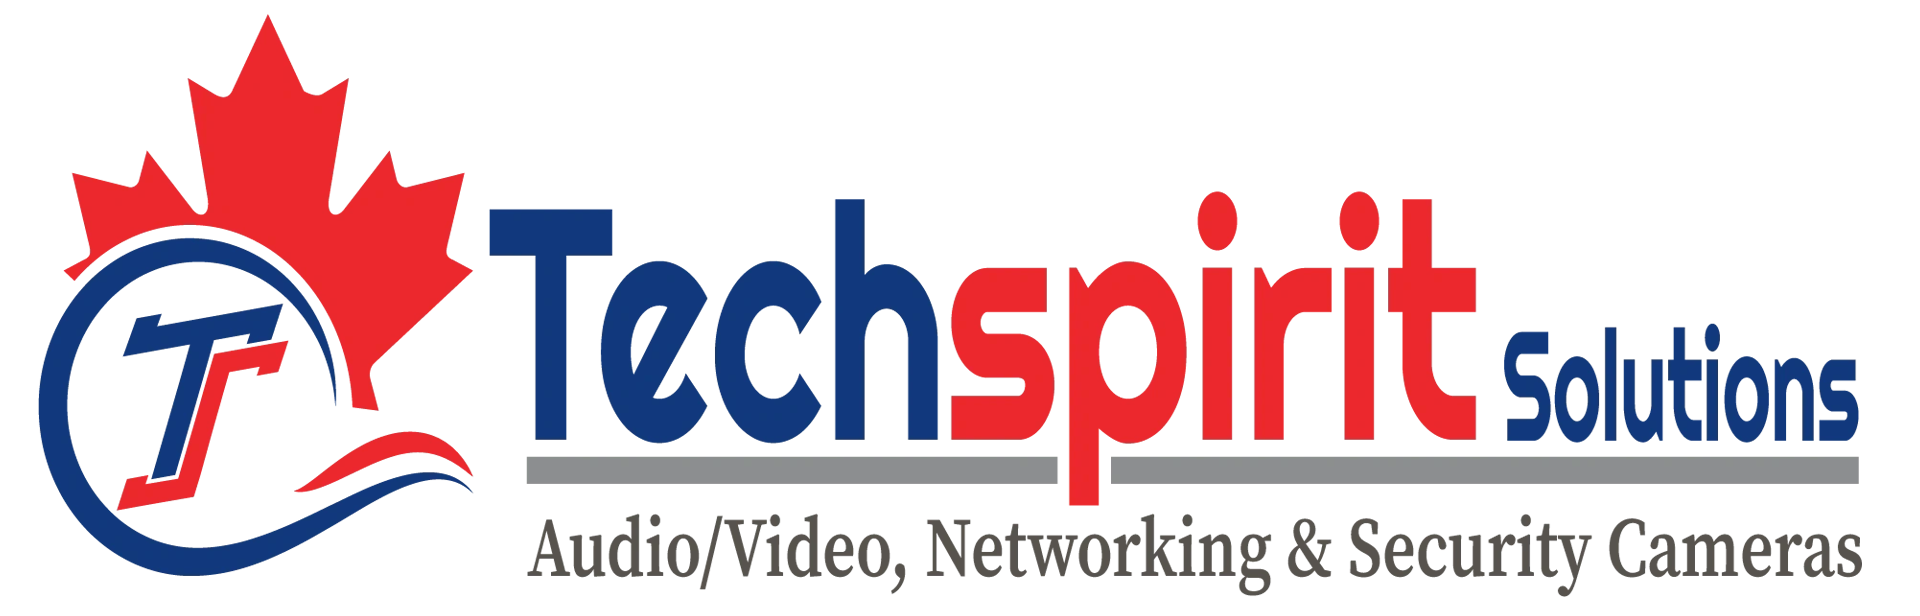 Techspirit Solutions Inc's logo